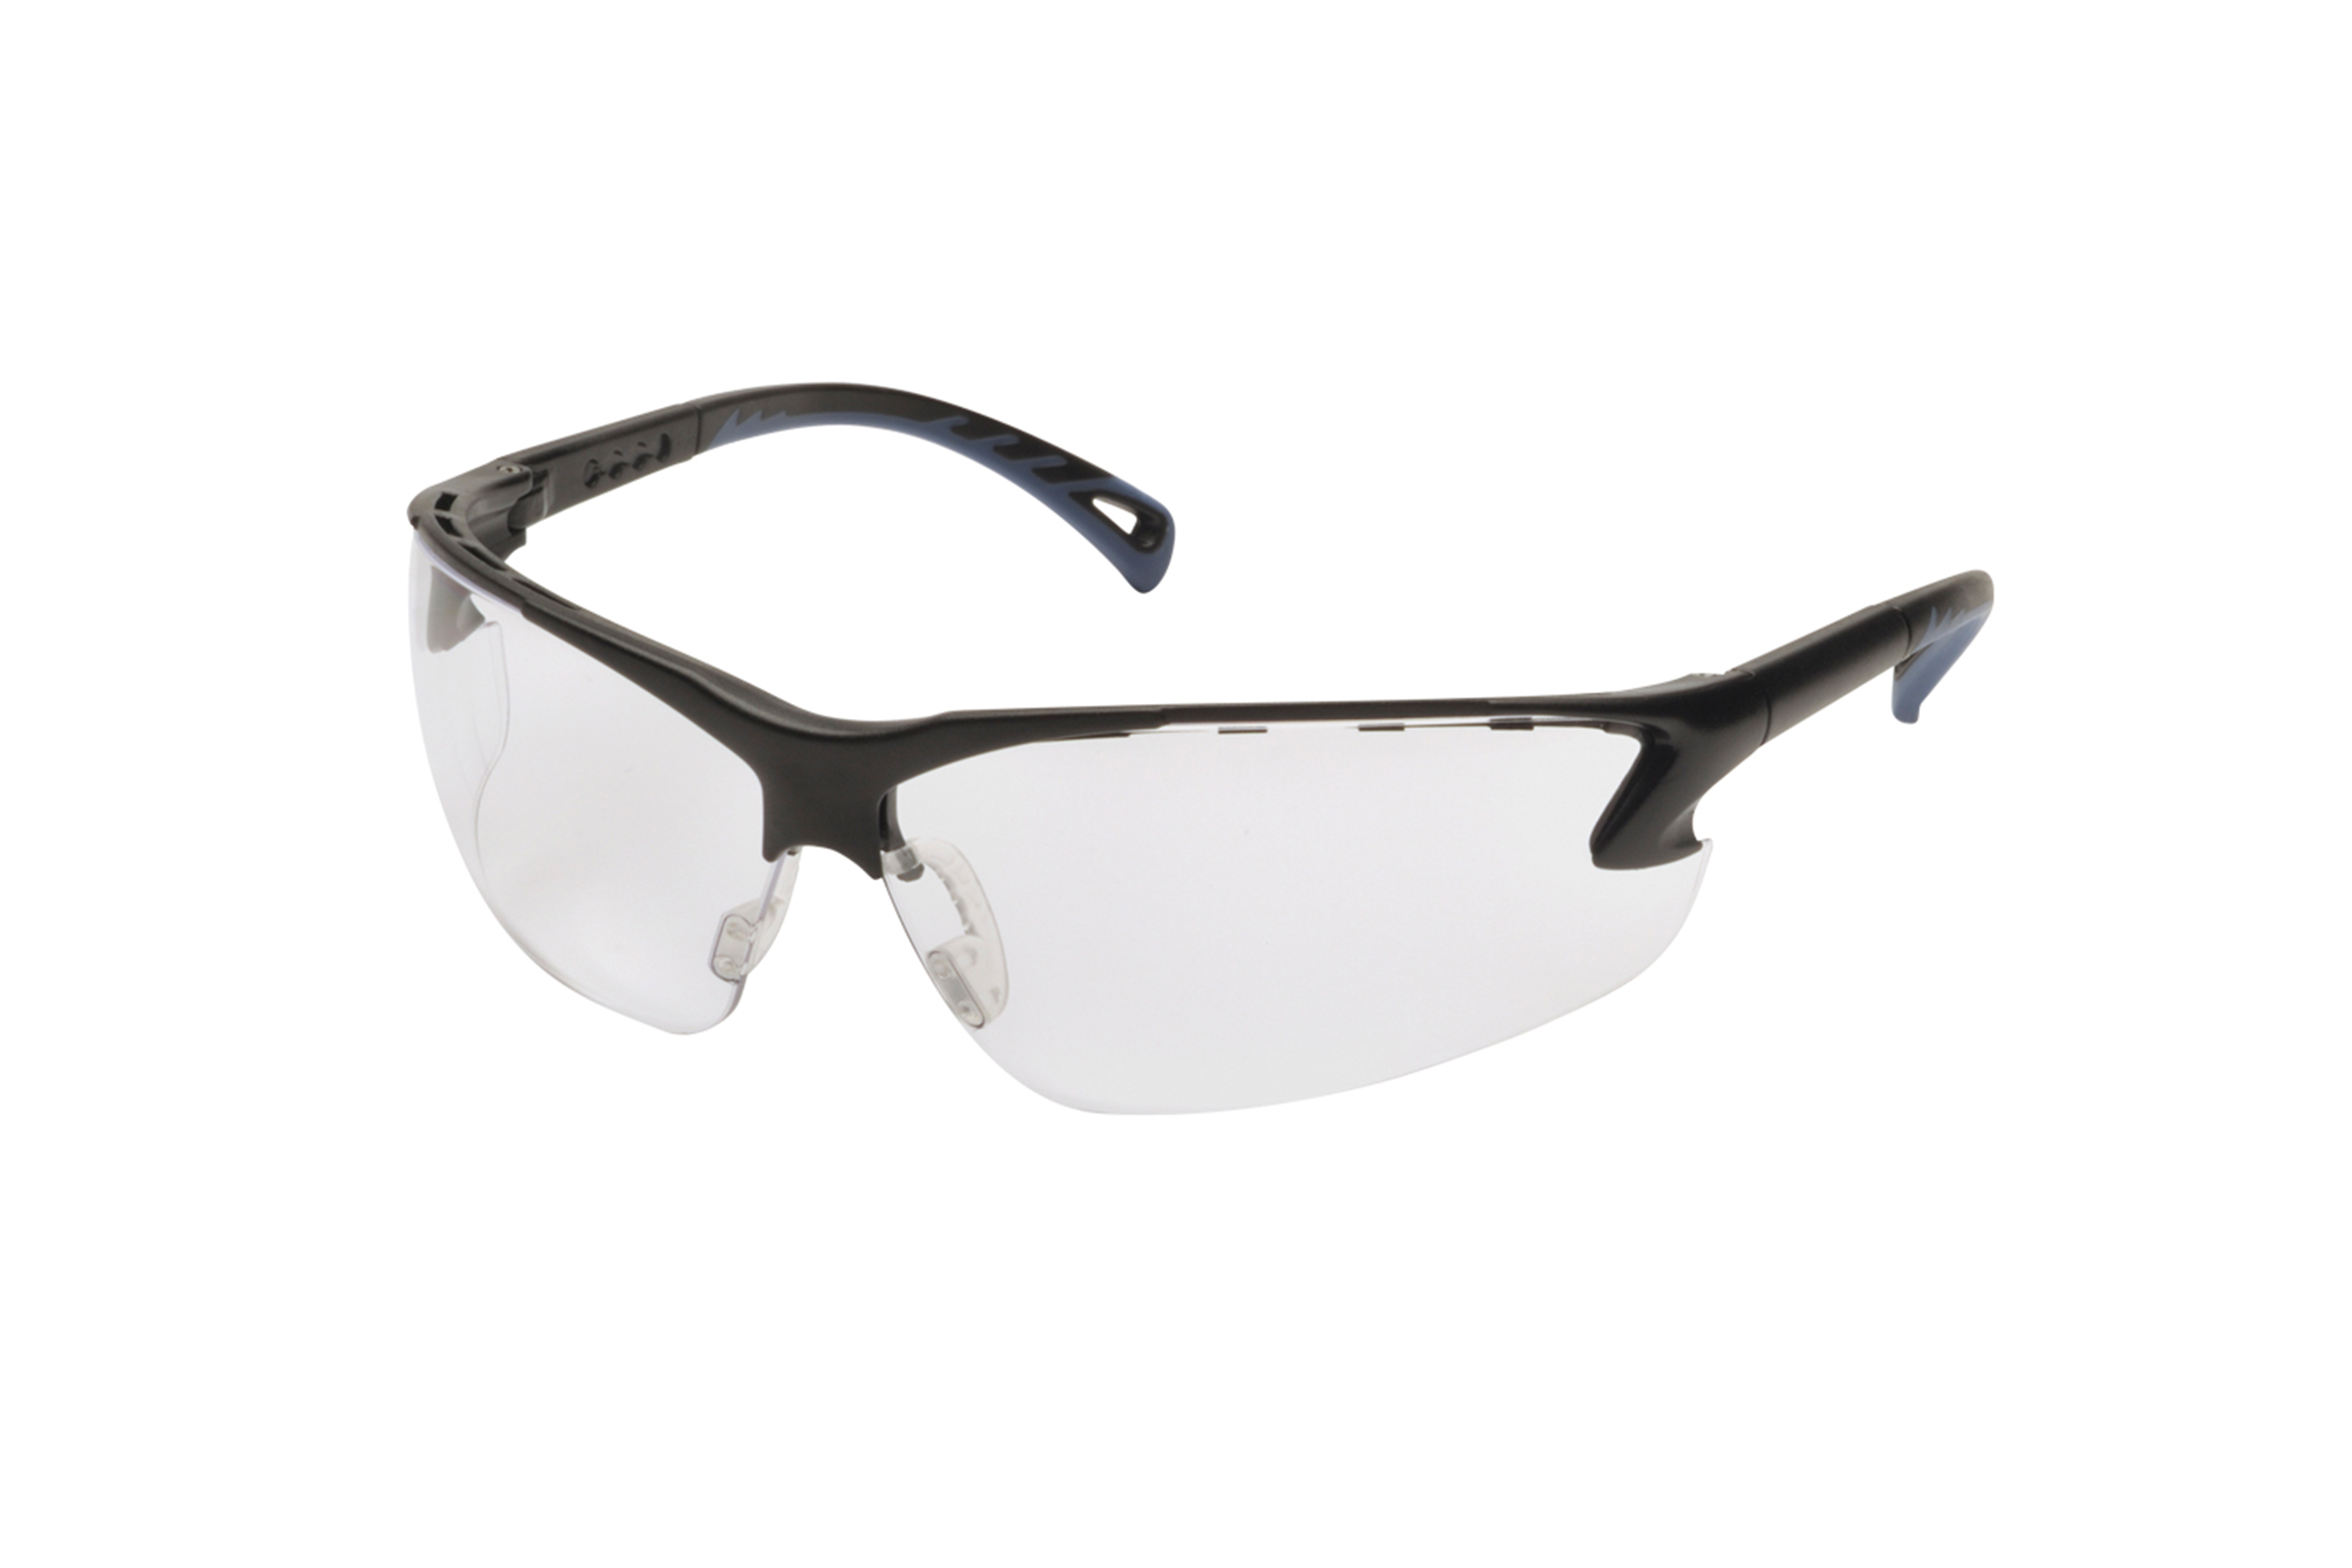 ASG Schießbrille klar